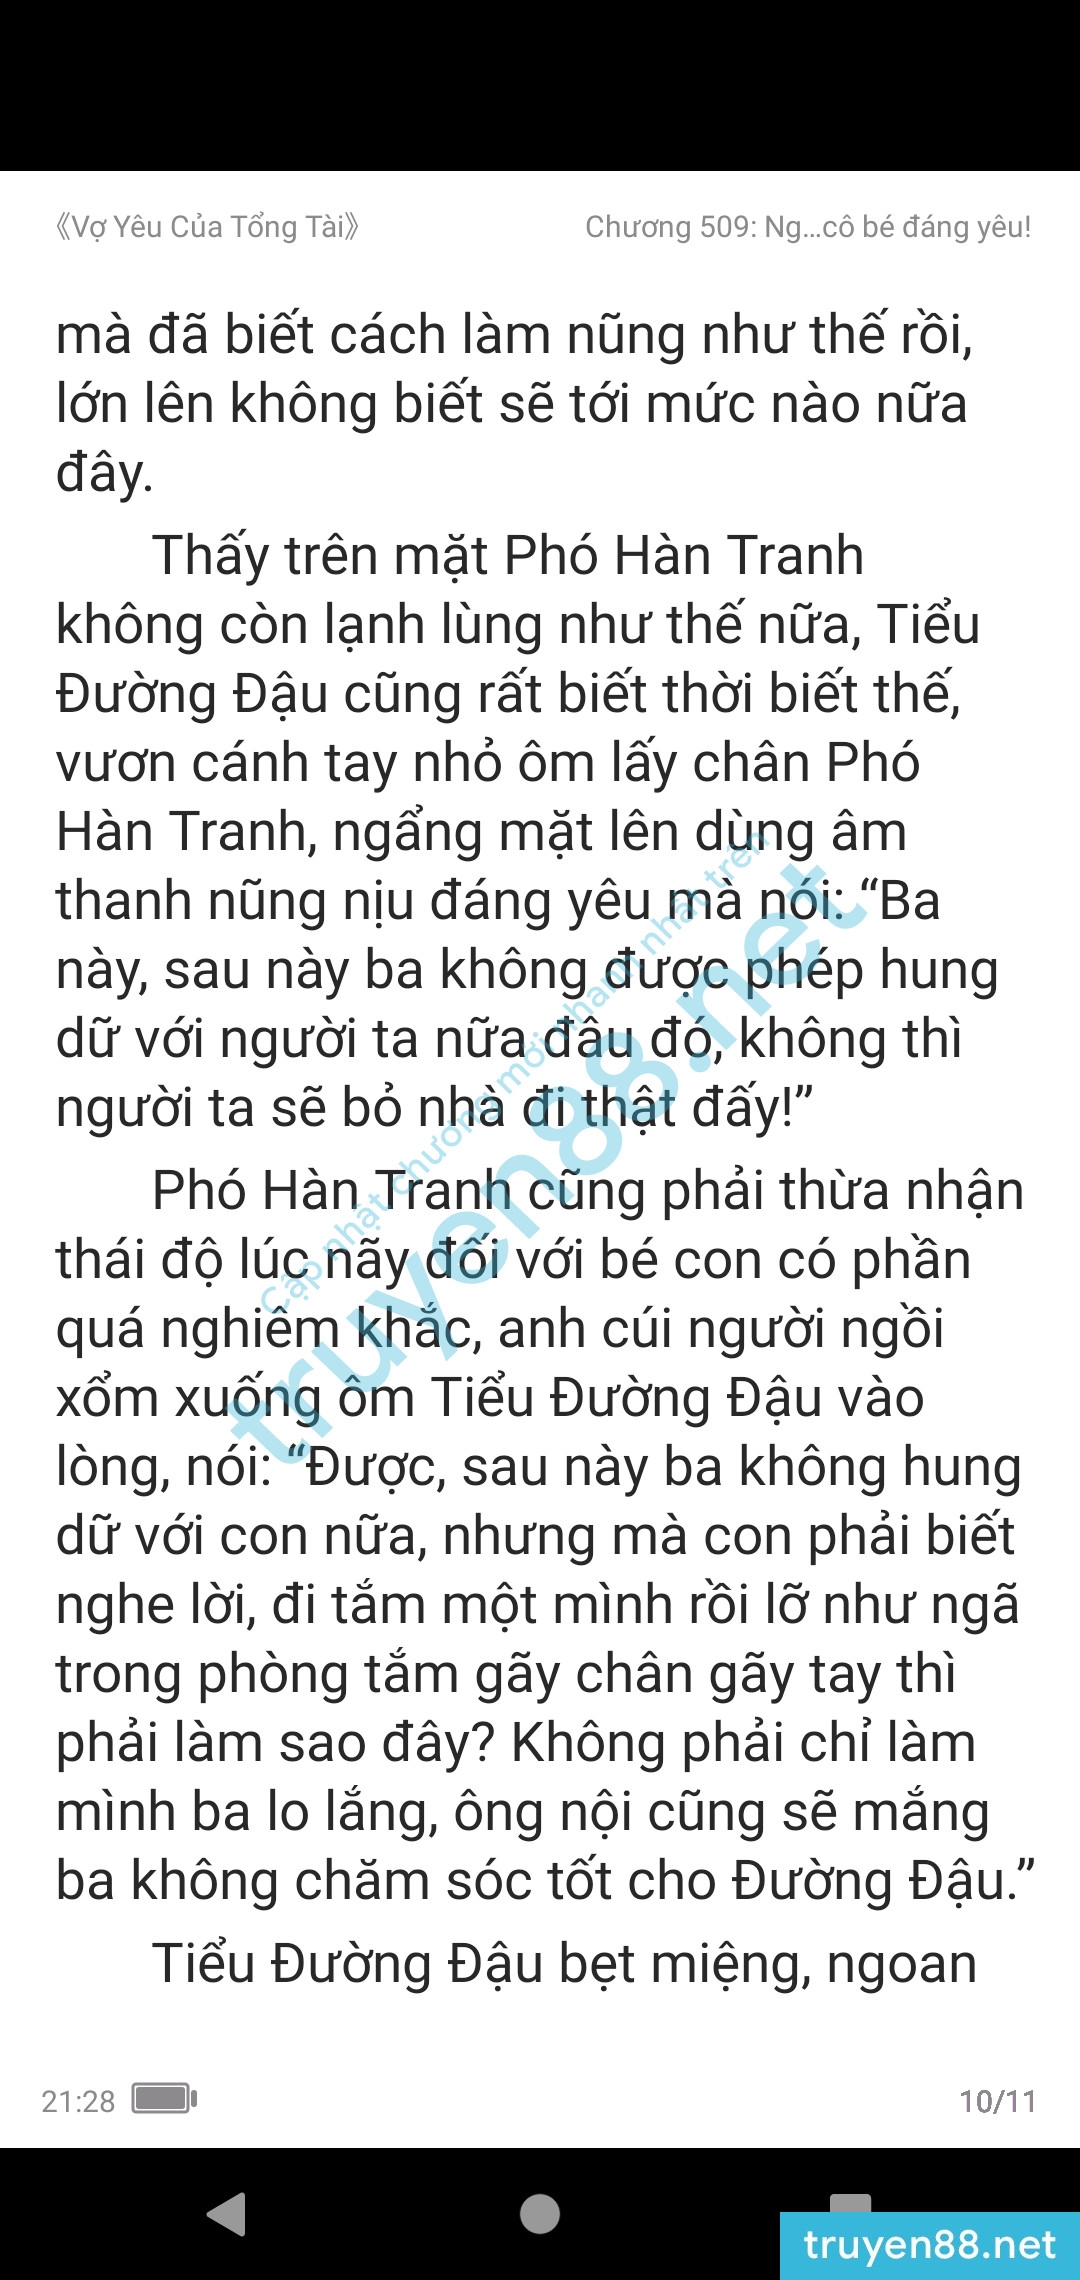 vo-yeu-cua-tong-tai-mo-vi-lan--pho-han-tranh-519-1